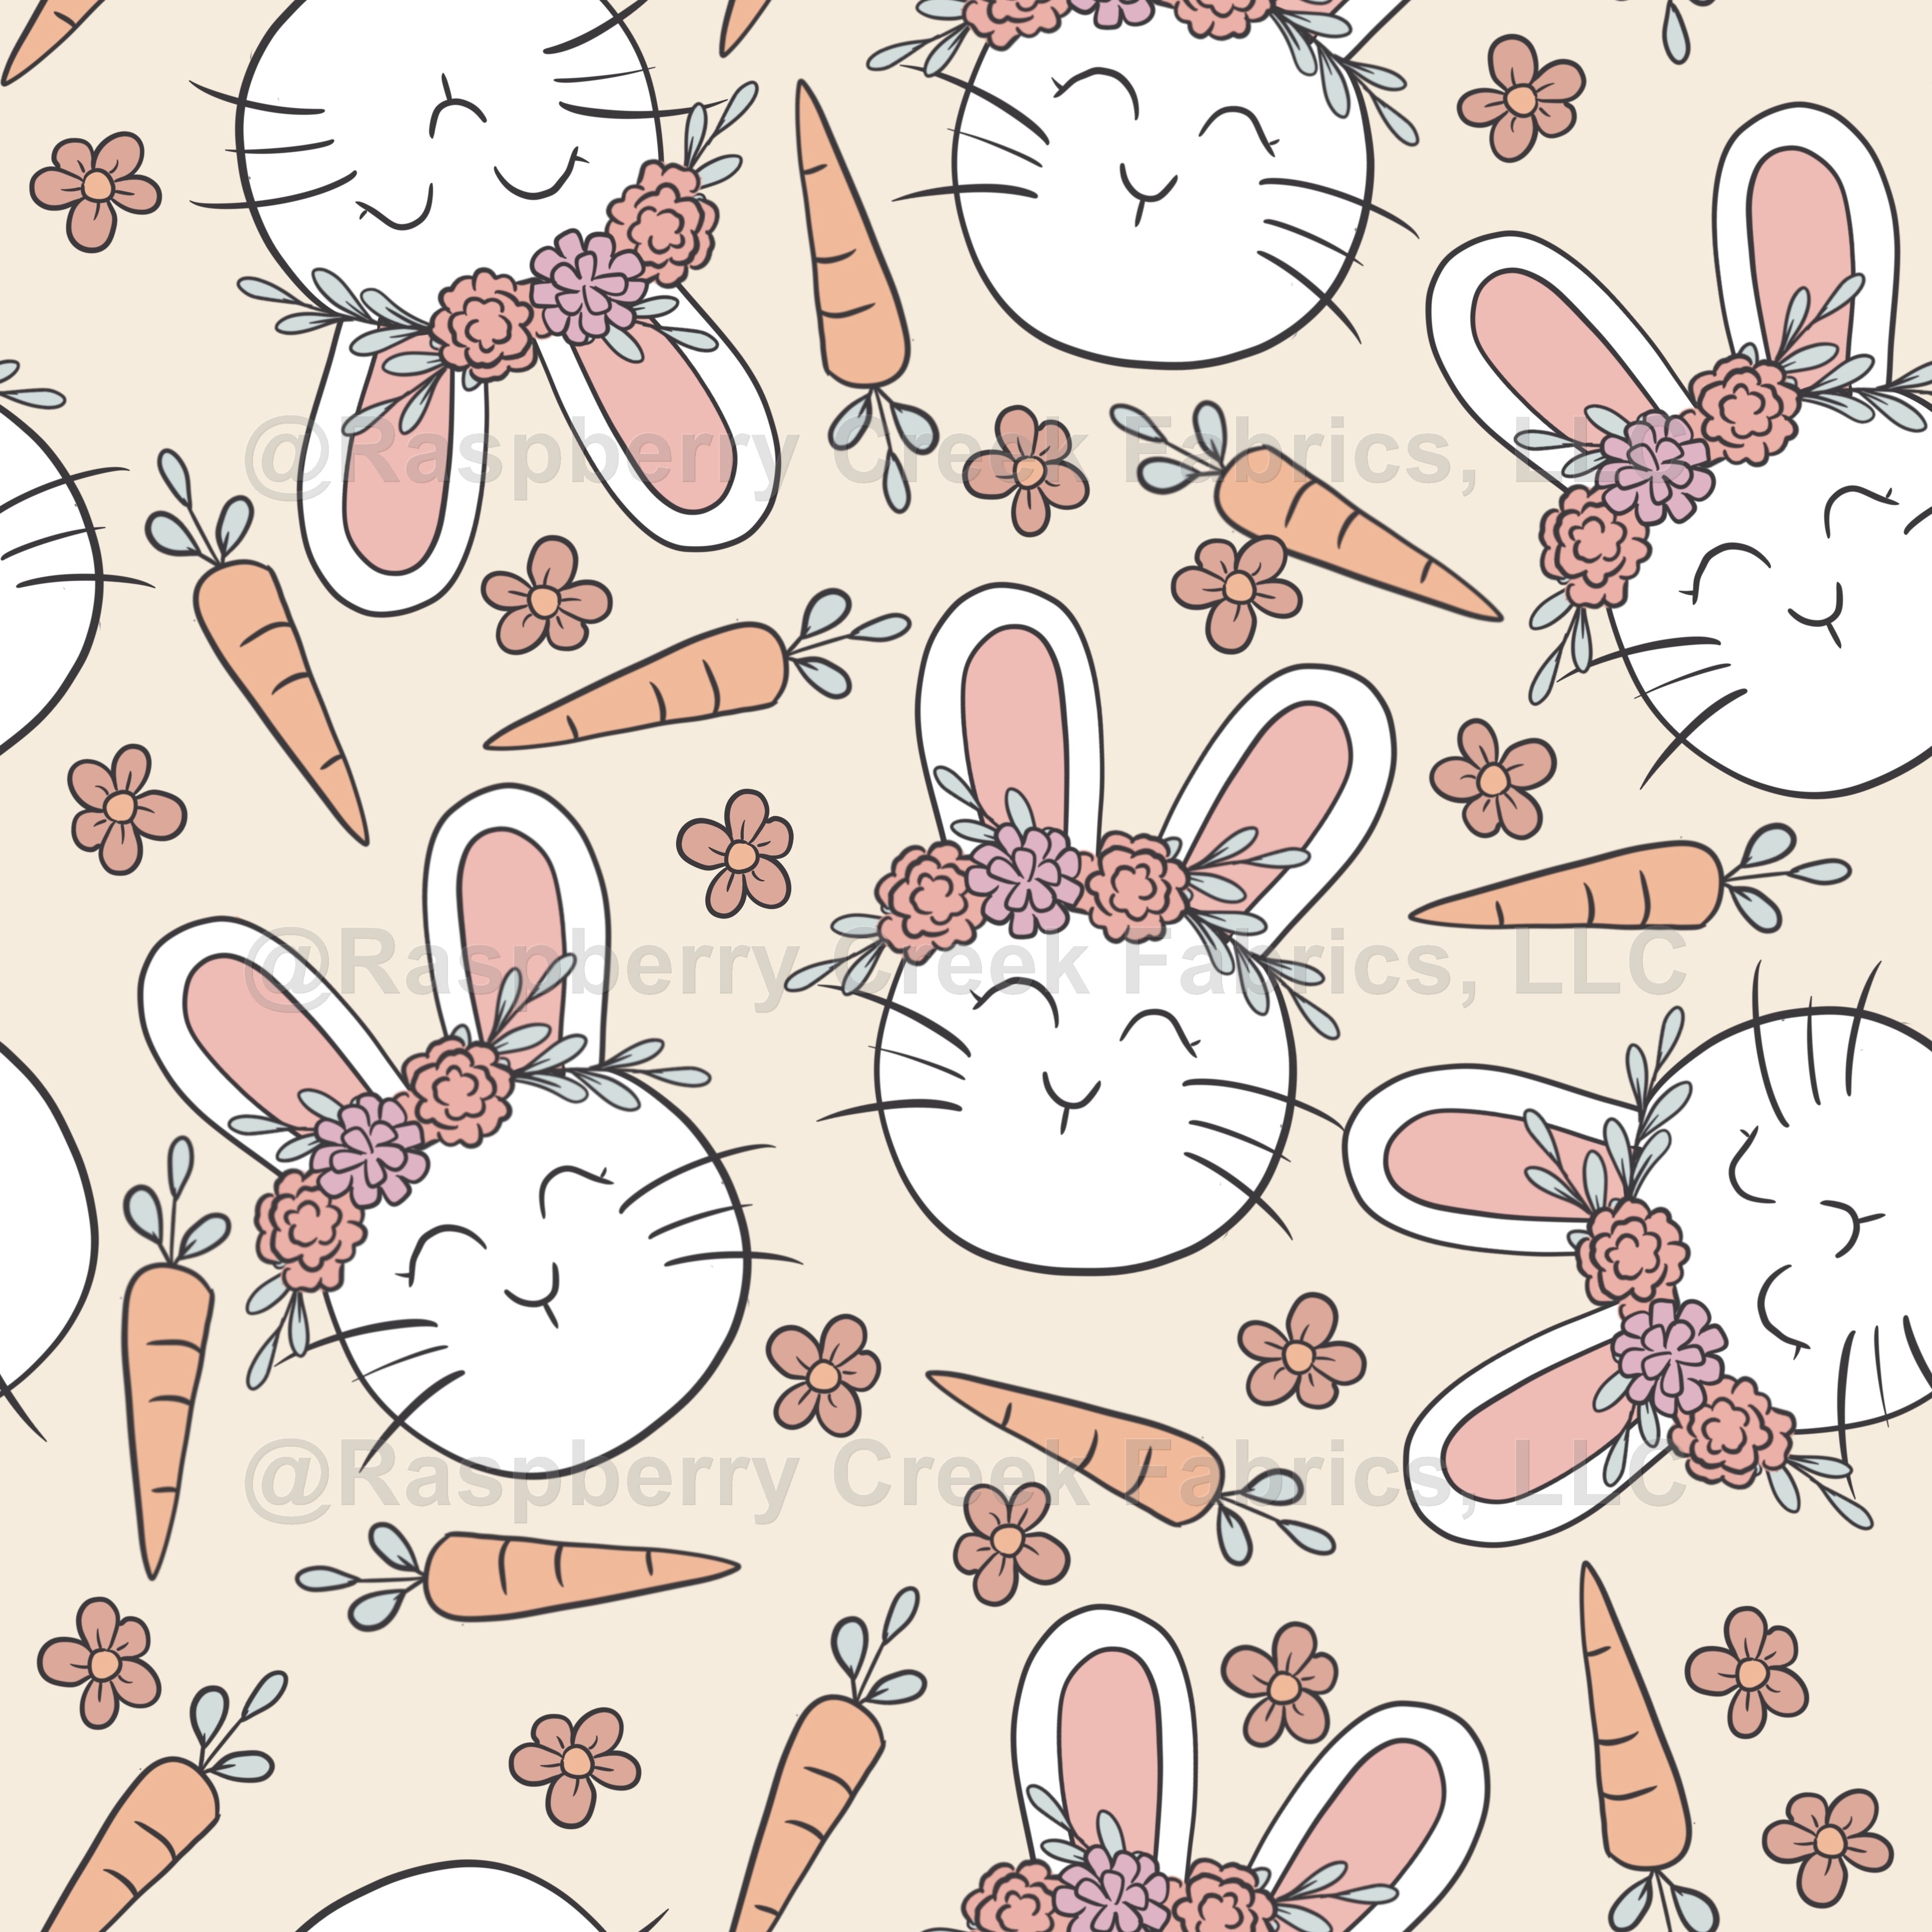 Bunny Flower crown Fabric, Raspberry Creek Fabrics, watermarked